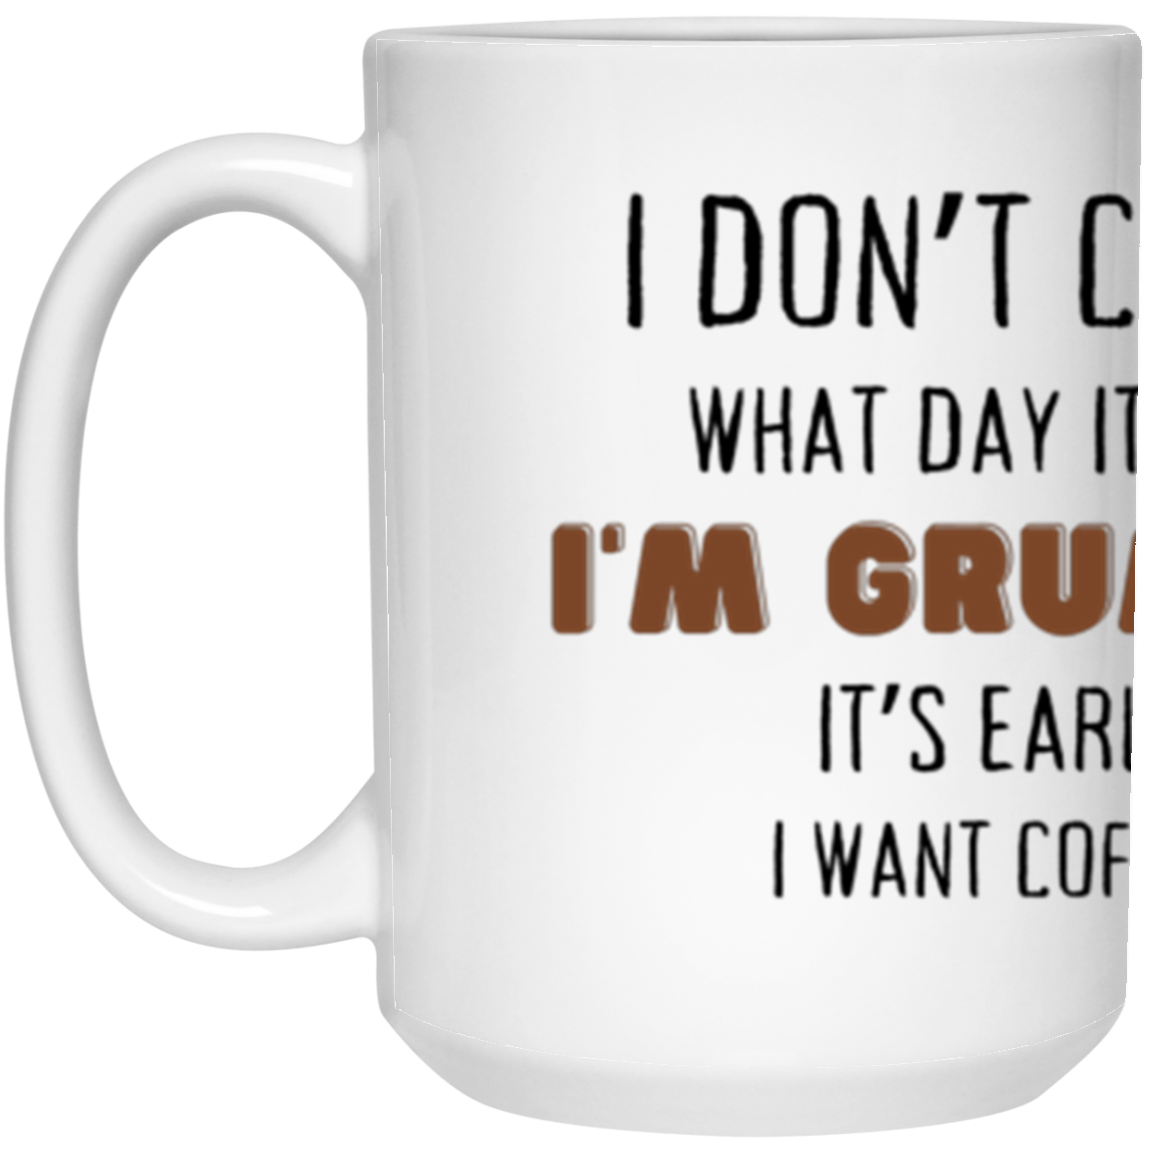 Grumpy without Coffee White Coffee ug